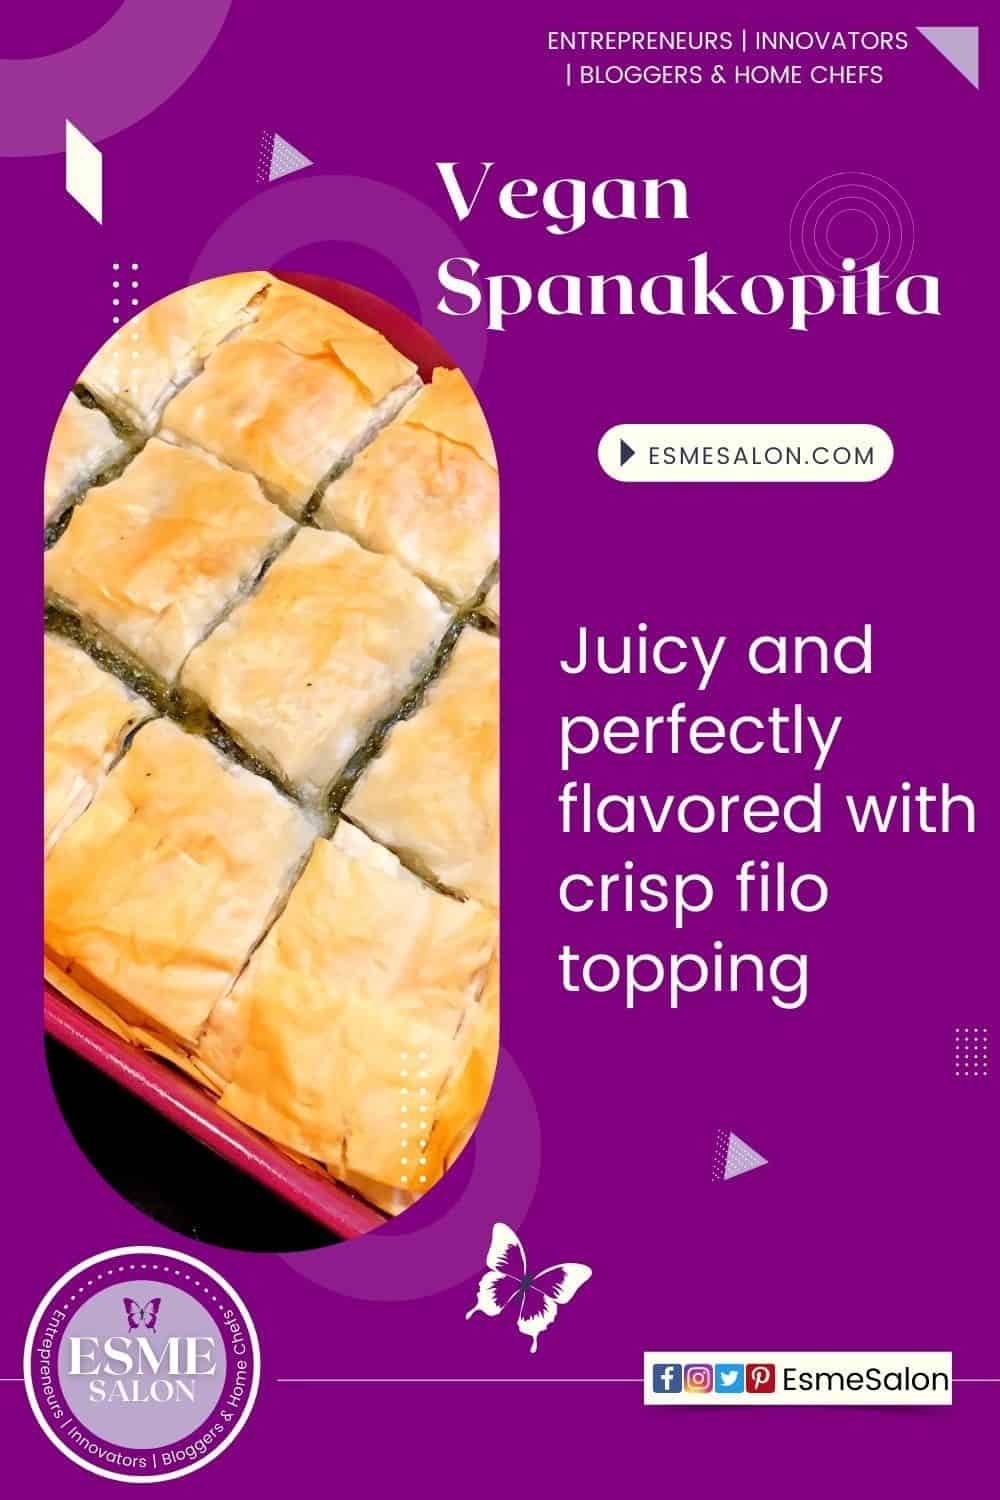 Vegan Spanakopita with spinach, vegan ricotta and crispy baked vegan filo sheets